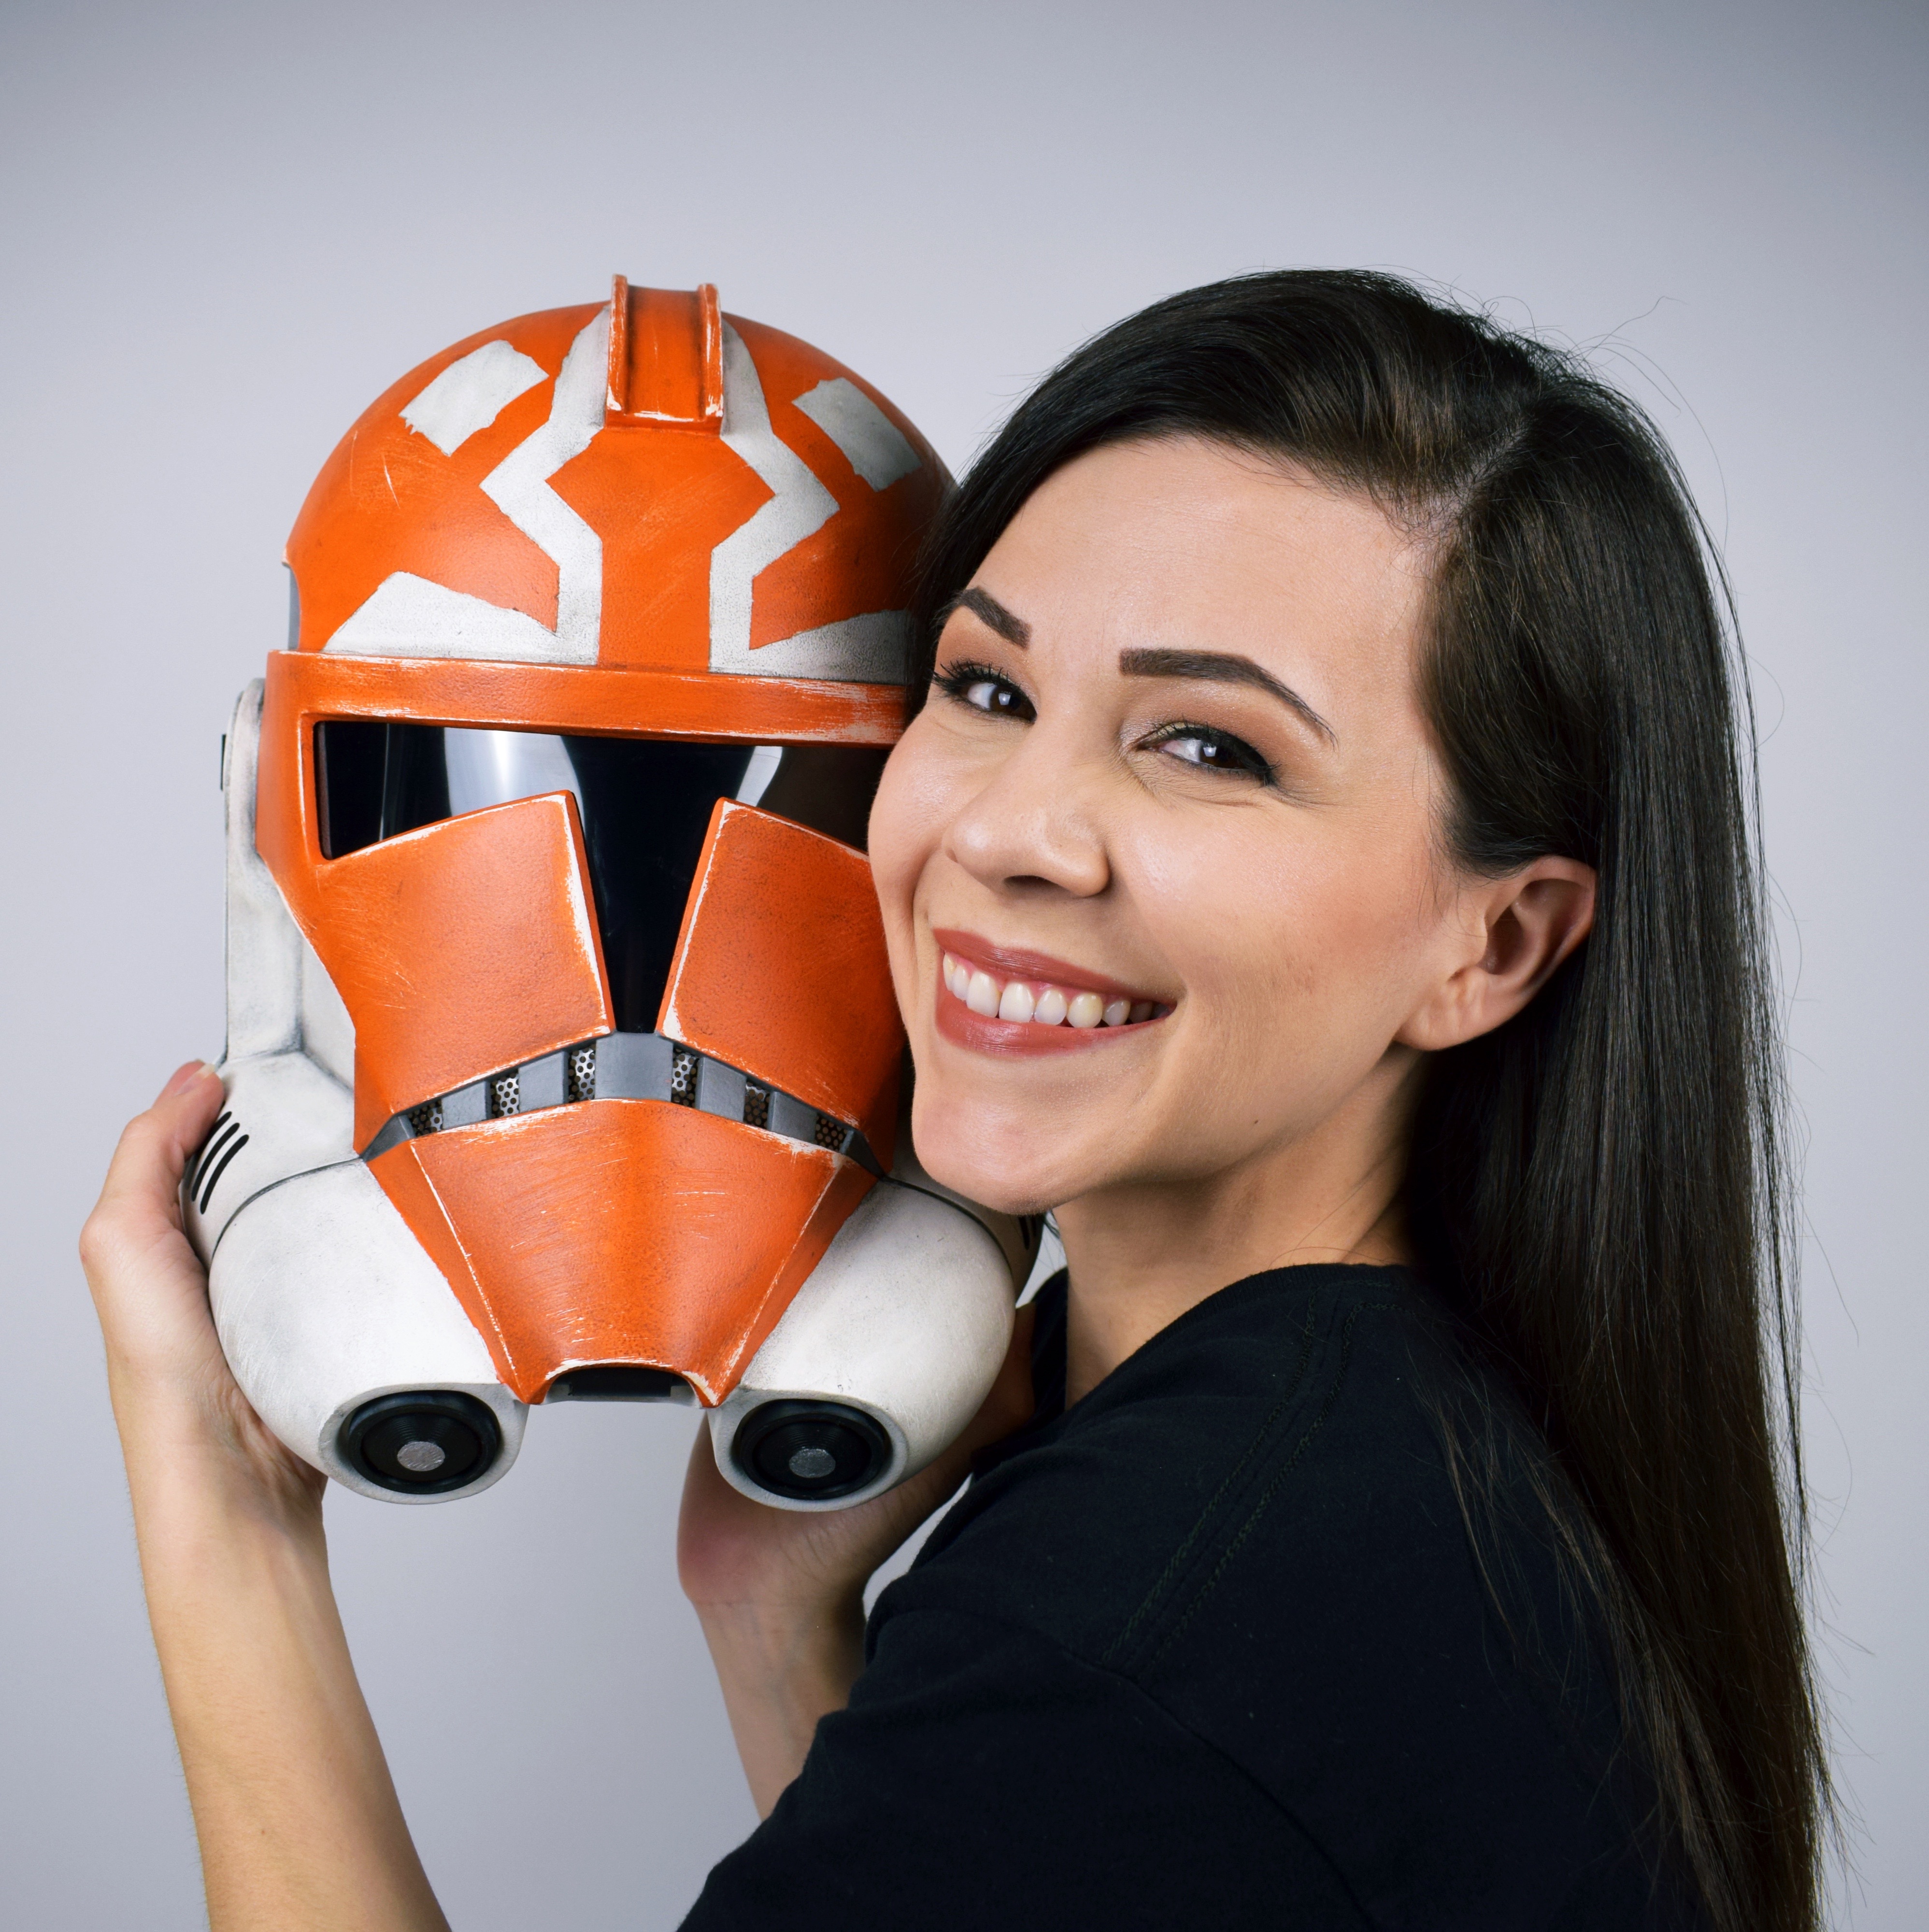 Star Wars 332nd Clone Trooper Helmet Review - SamoilovART | Anakin and His Angel